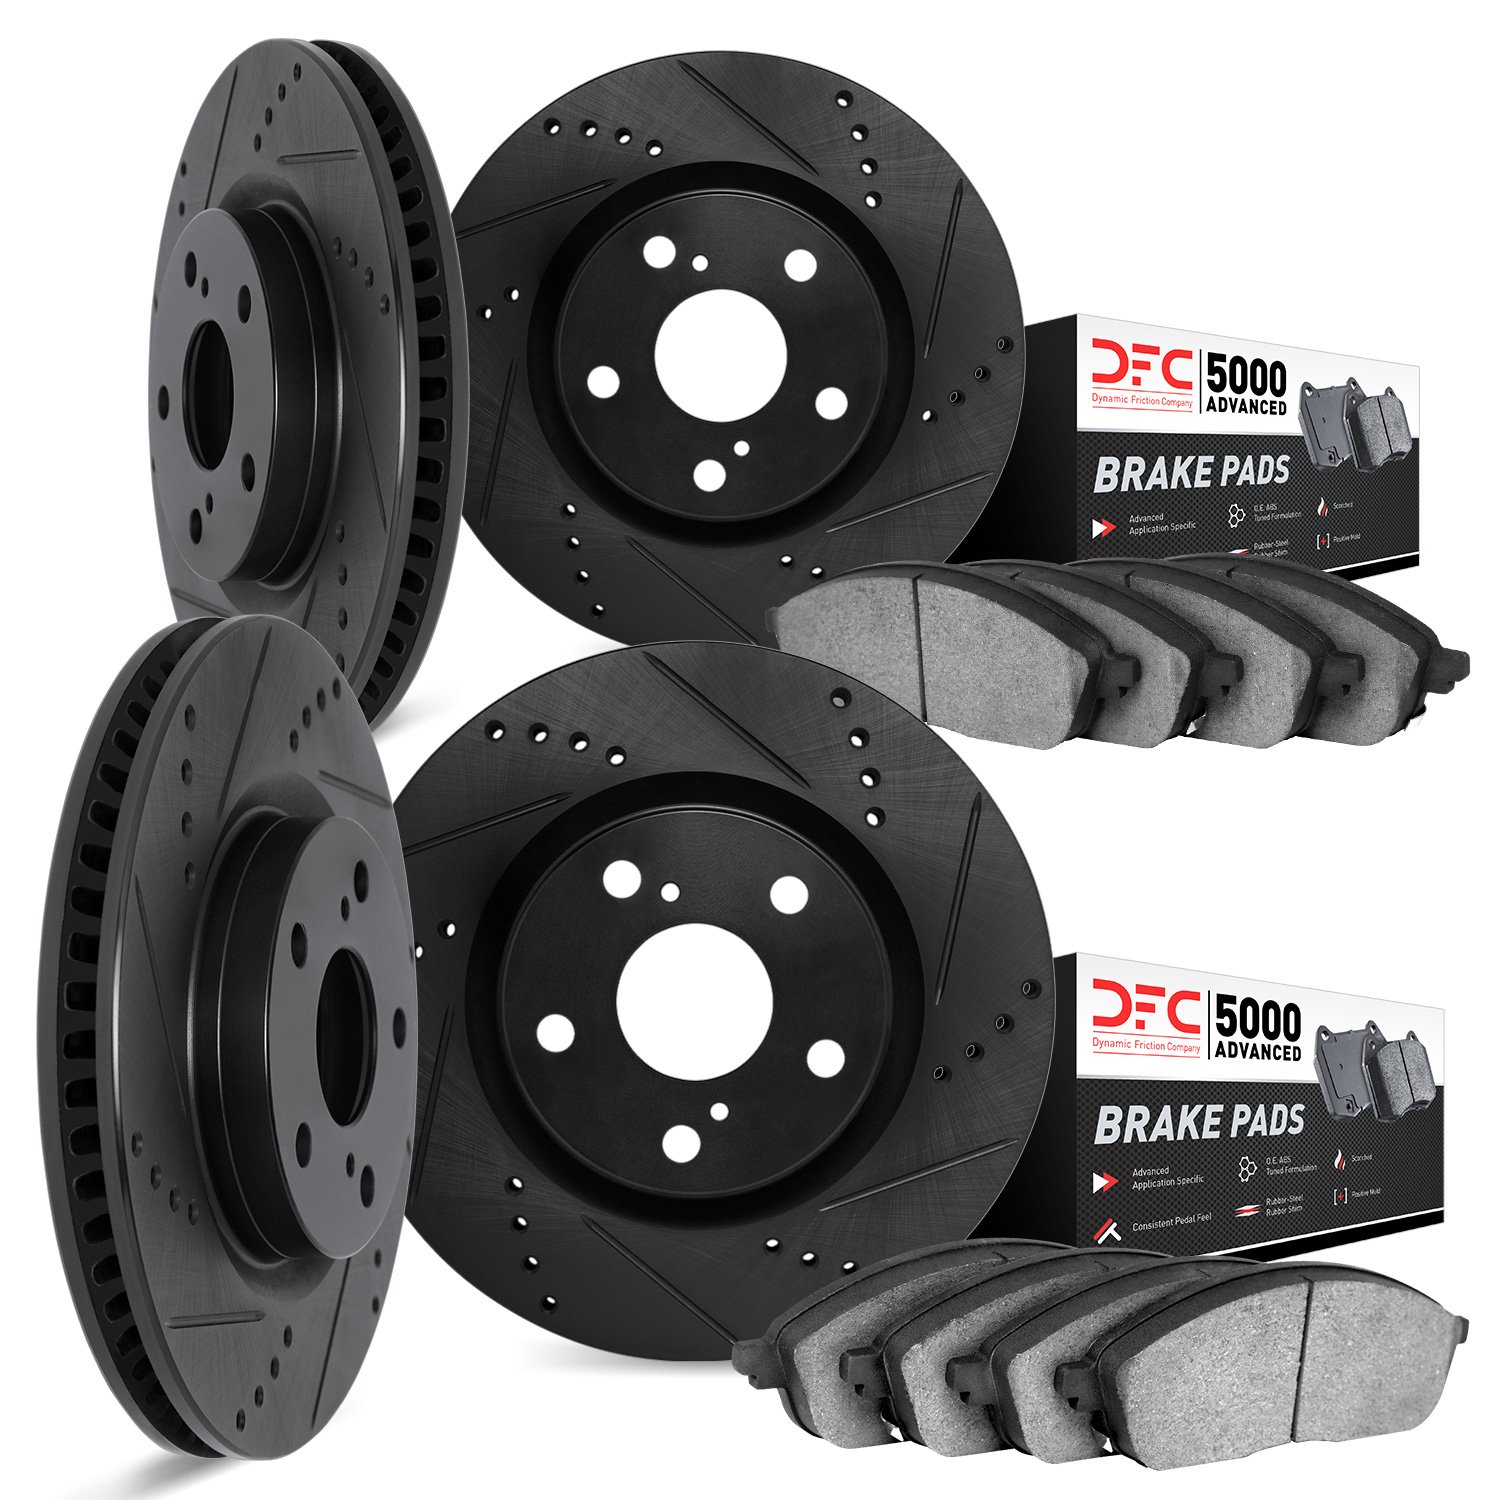 8504-39029 Drilled/Slotted Brake Rotors w/5000 Advanced Brake Pads Kit [Black], 2006-2014 Mopar, Position: Front and Rear